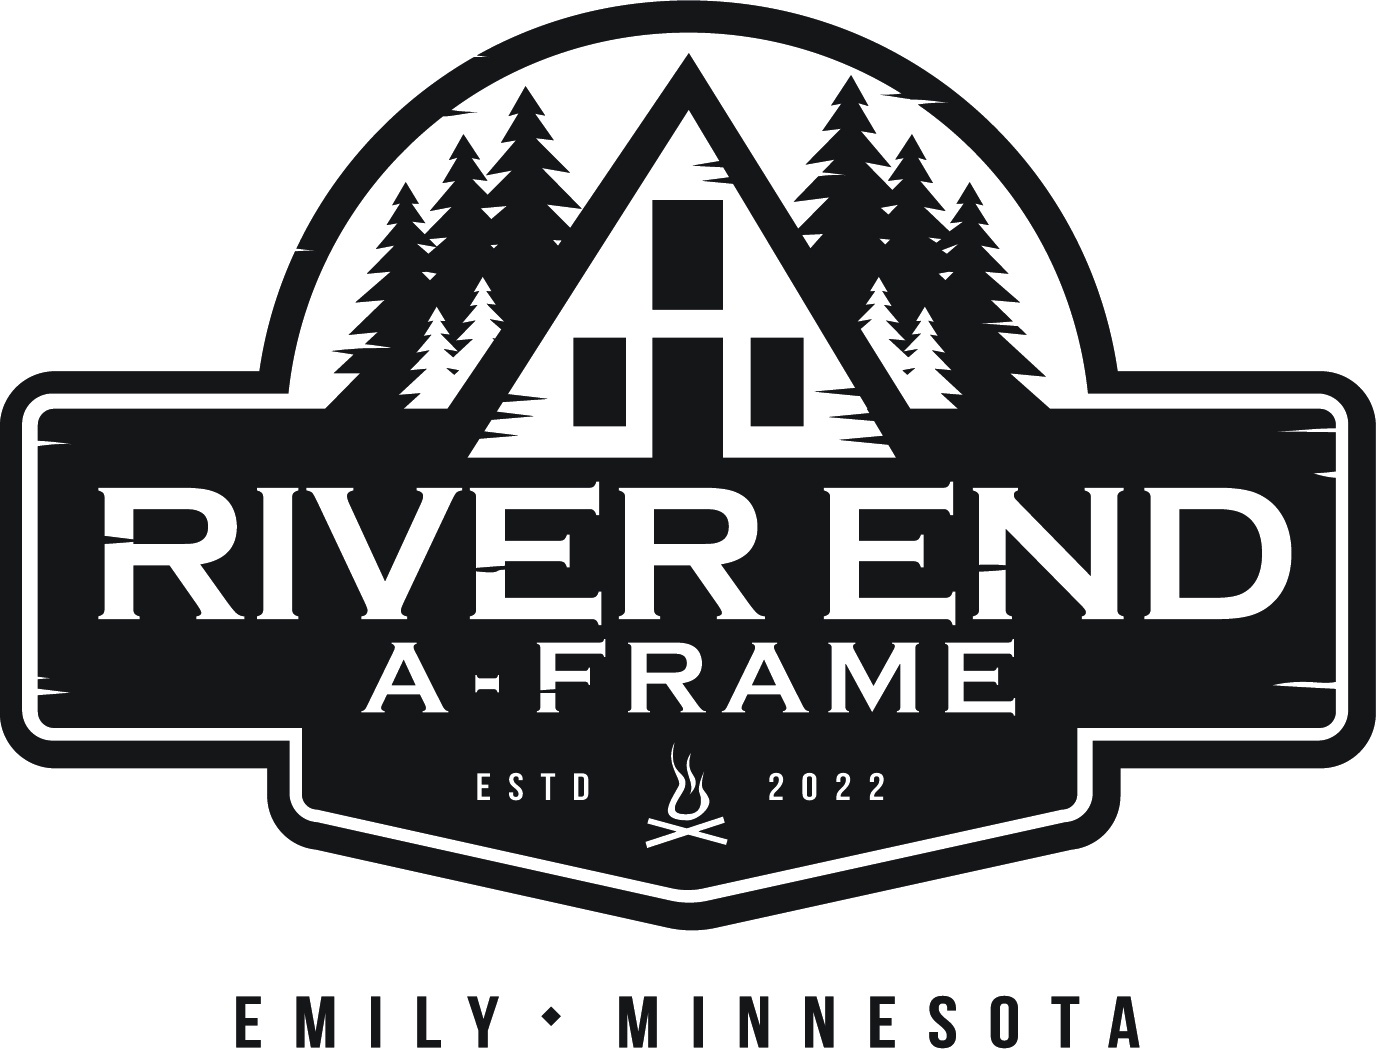 River End A-Frame